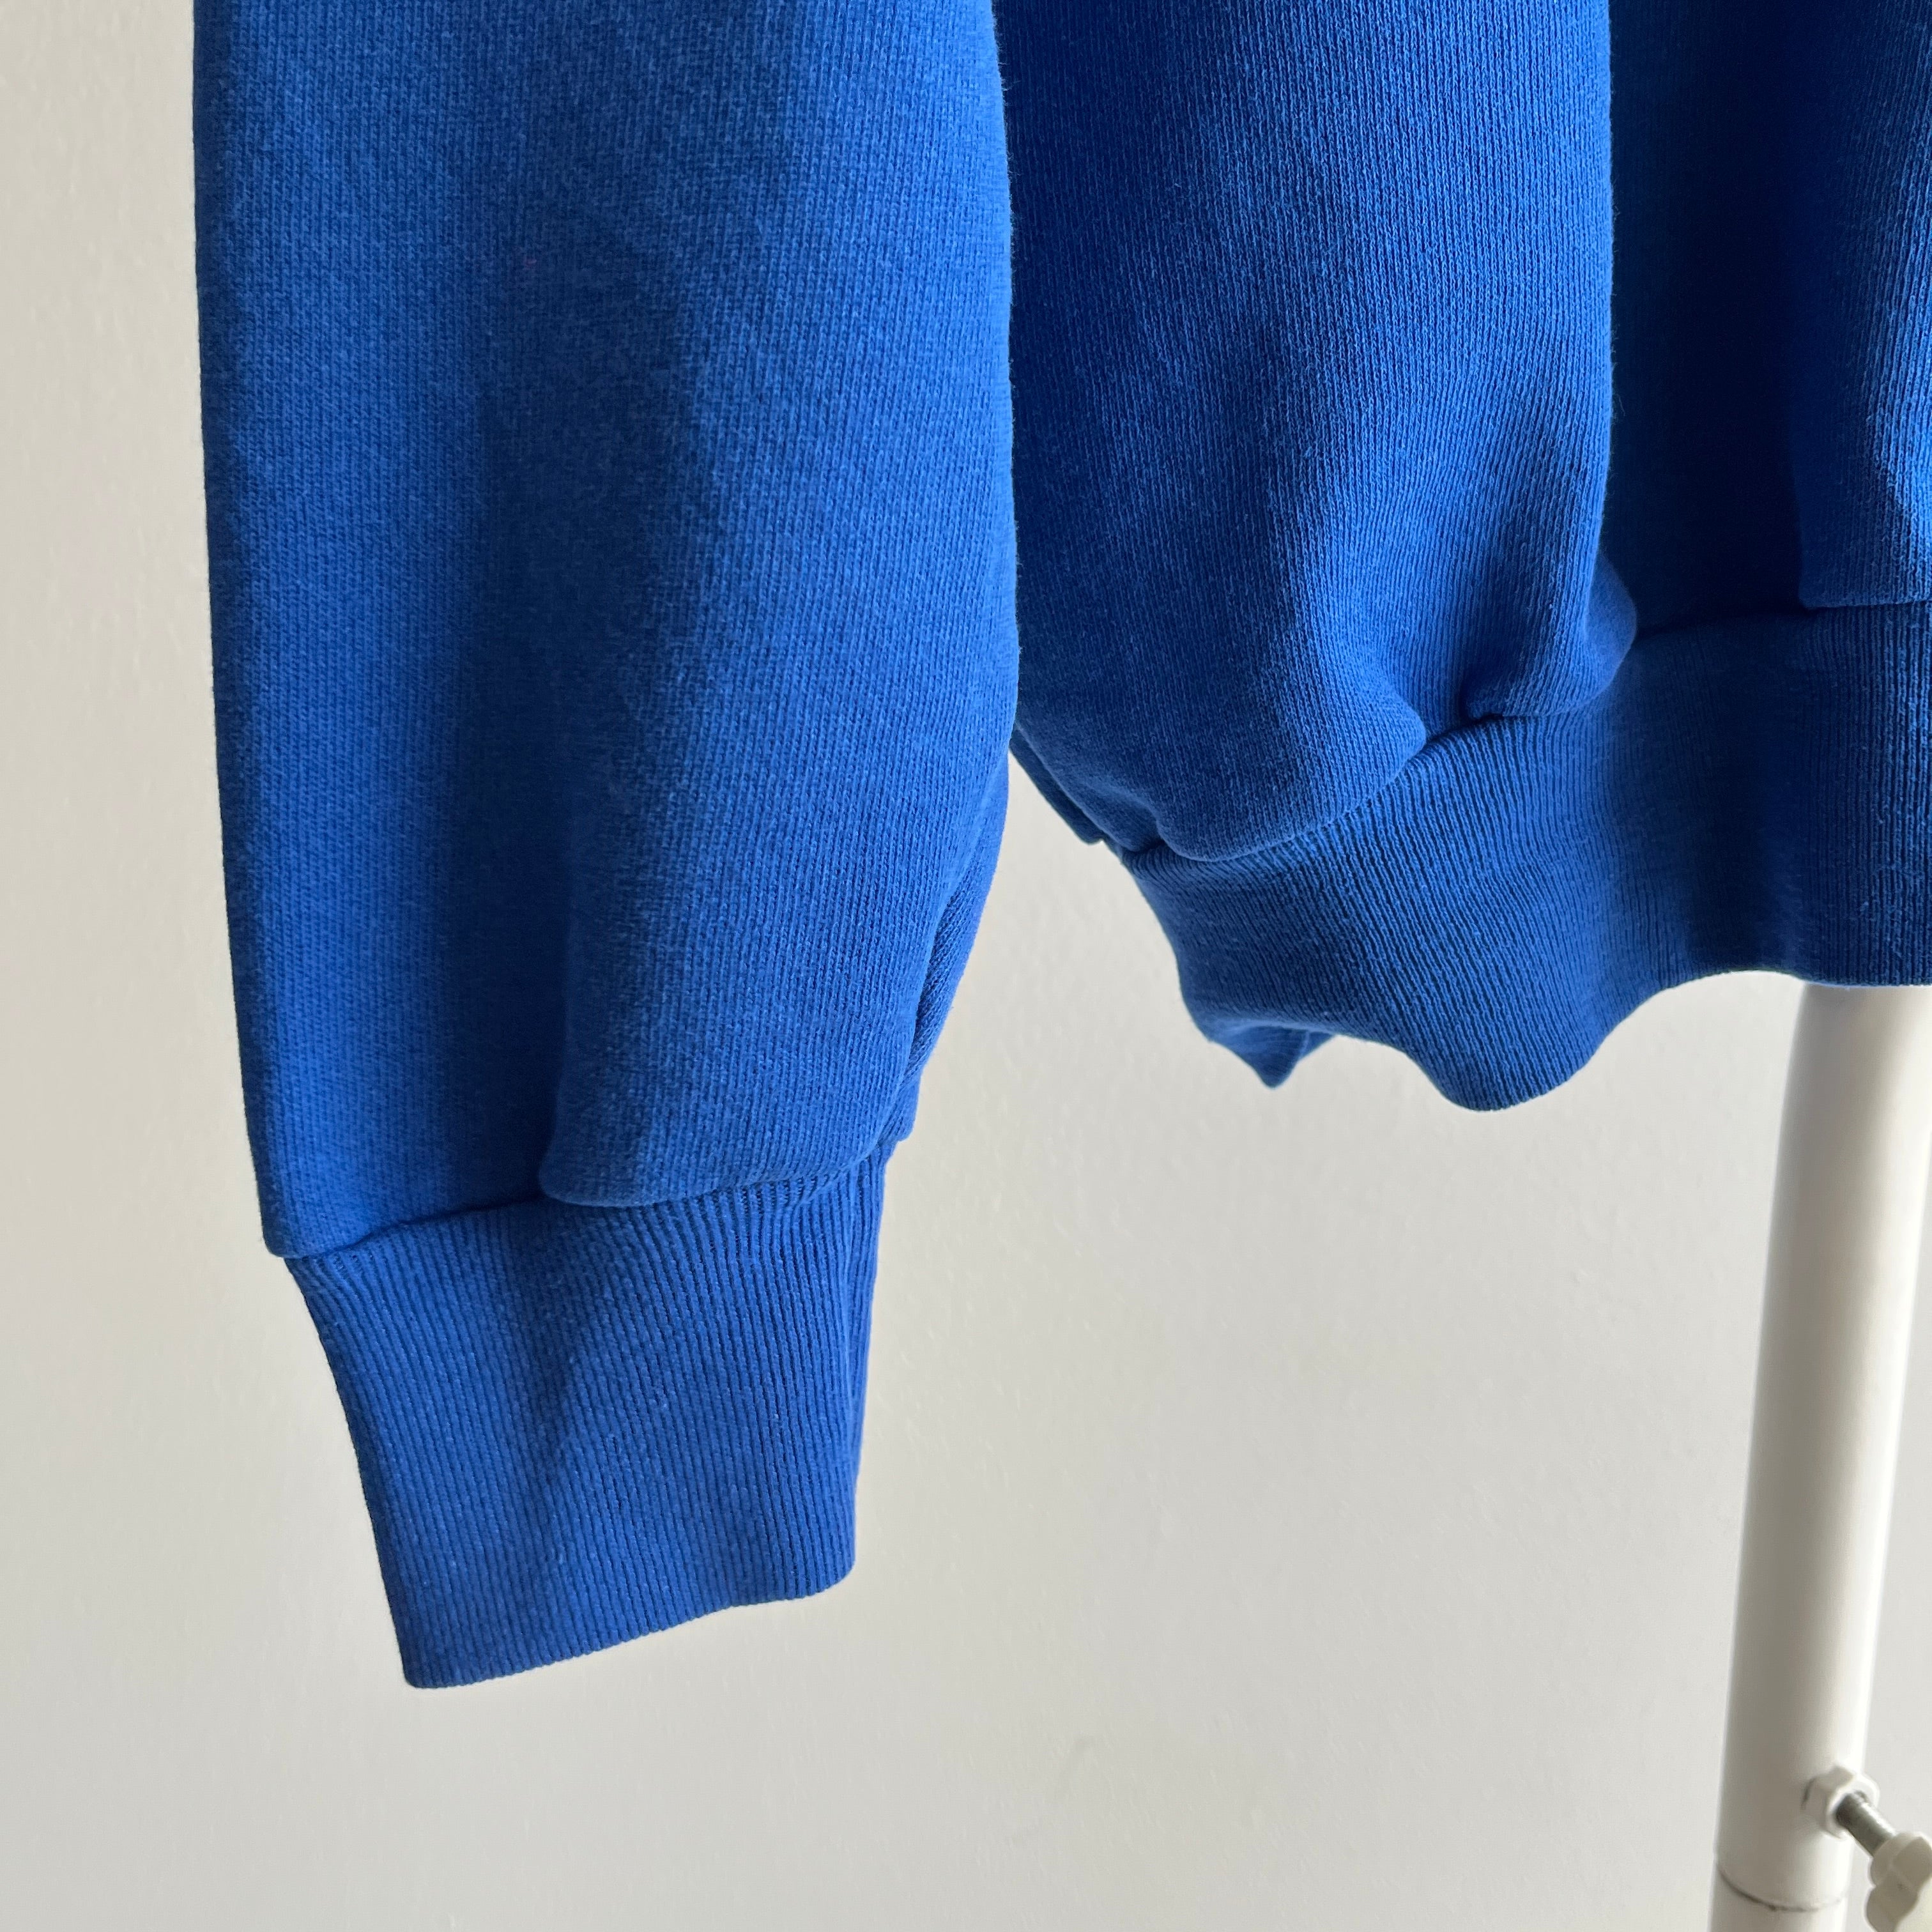 1980s Royal Dodger Blue Raglan Sweatshirt